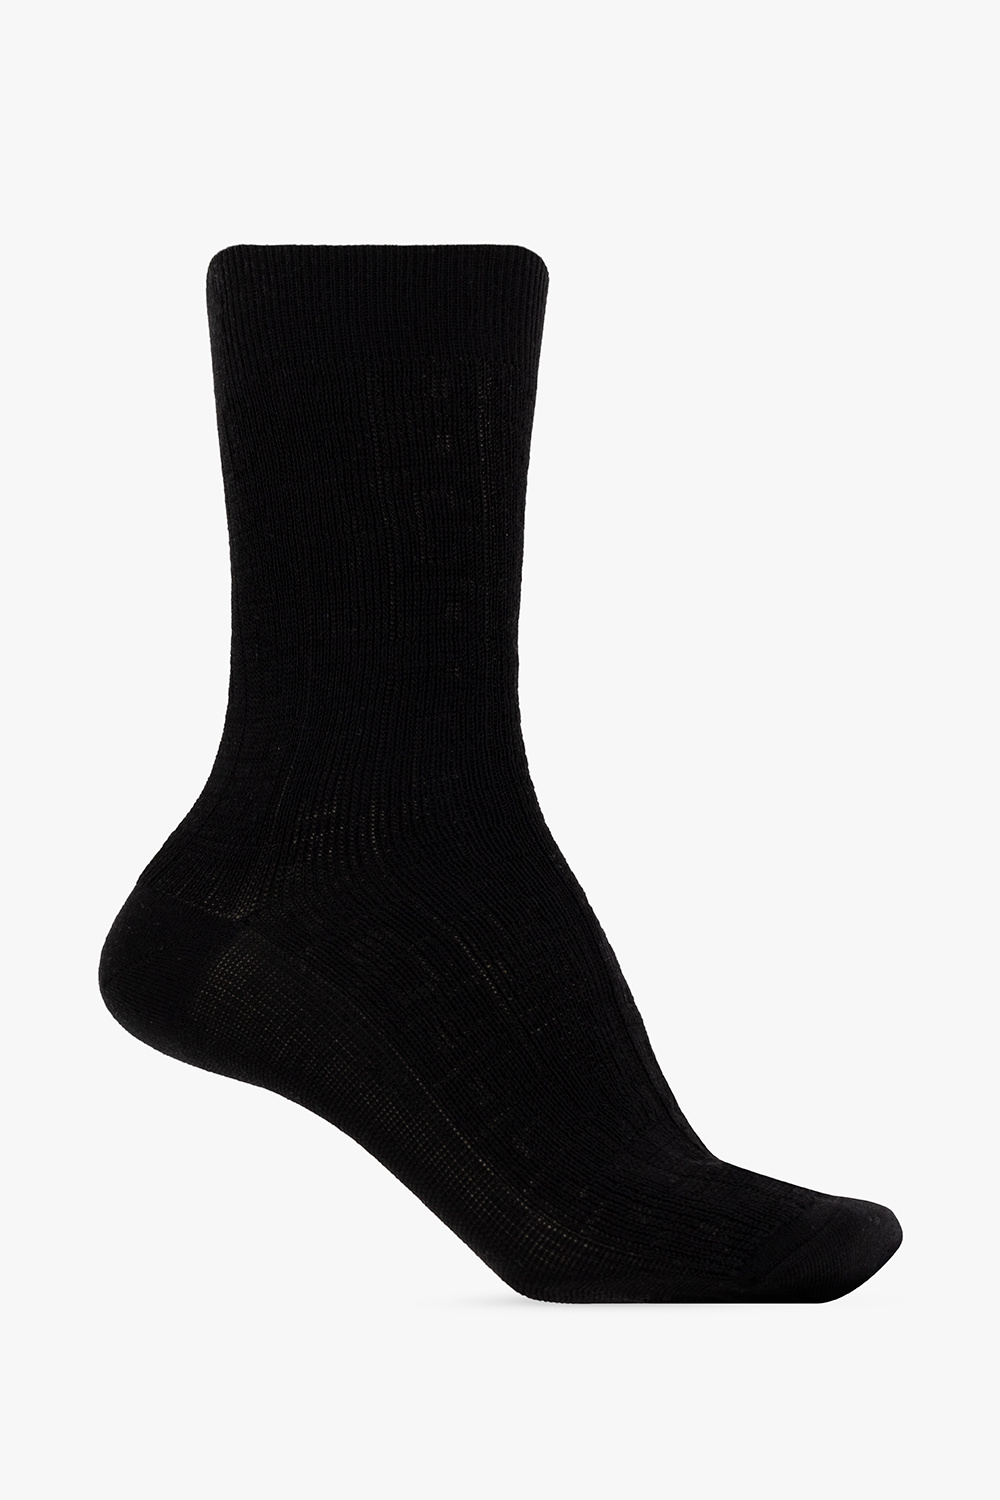 givenchy LEATHER Patterned socks